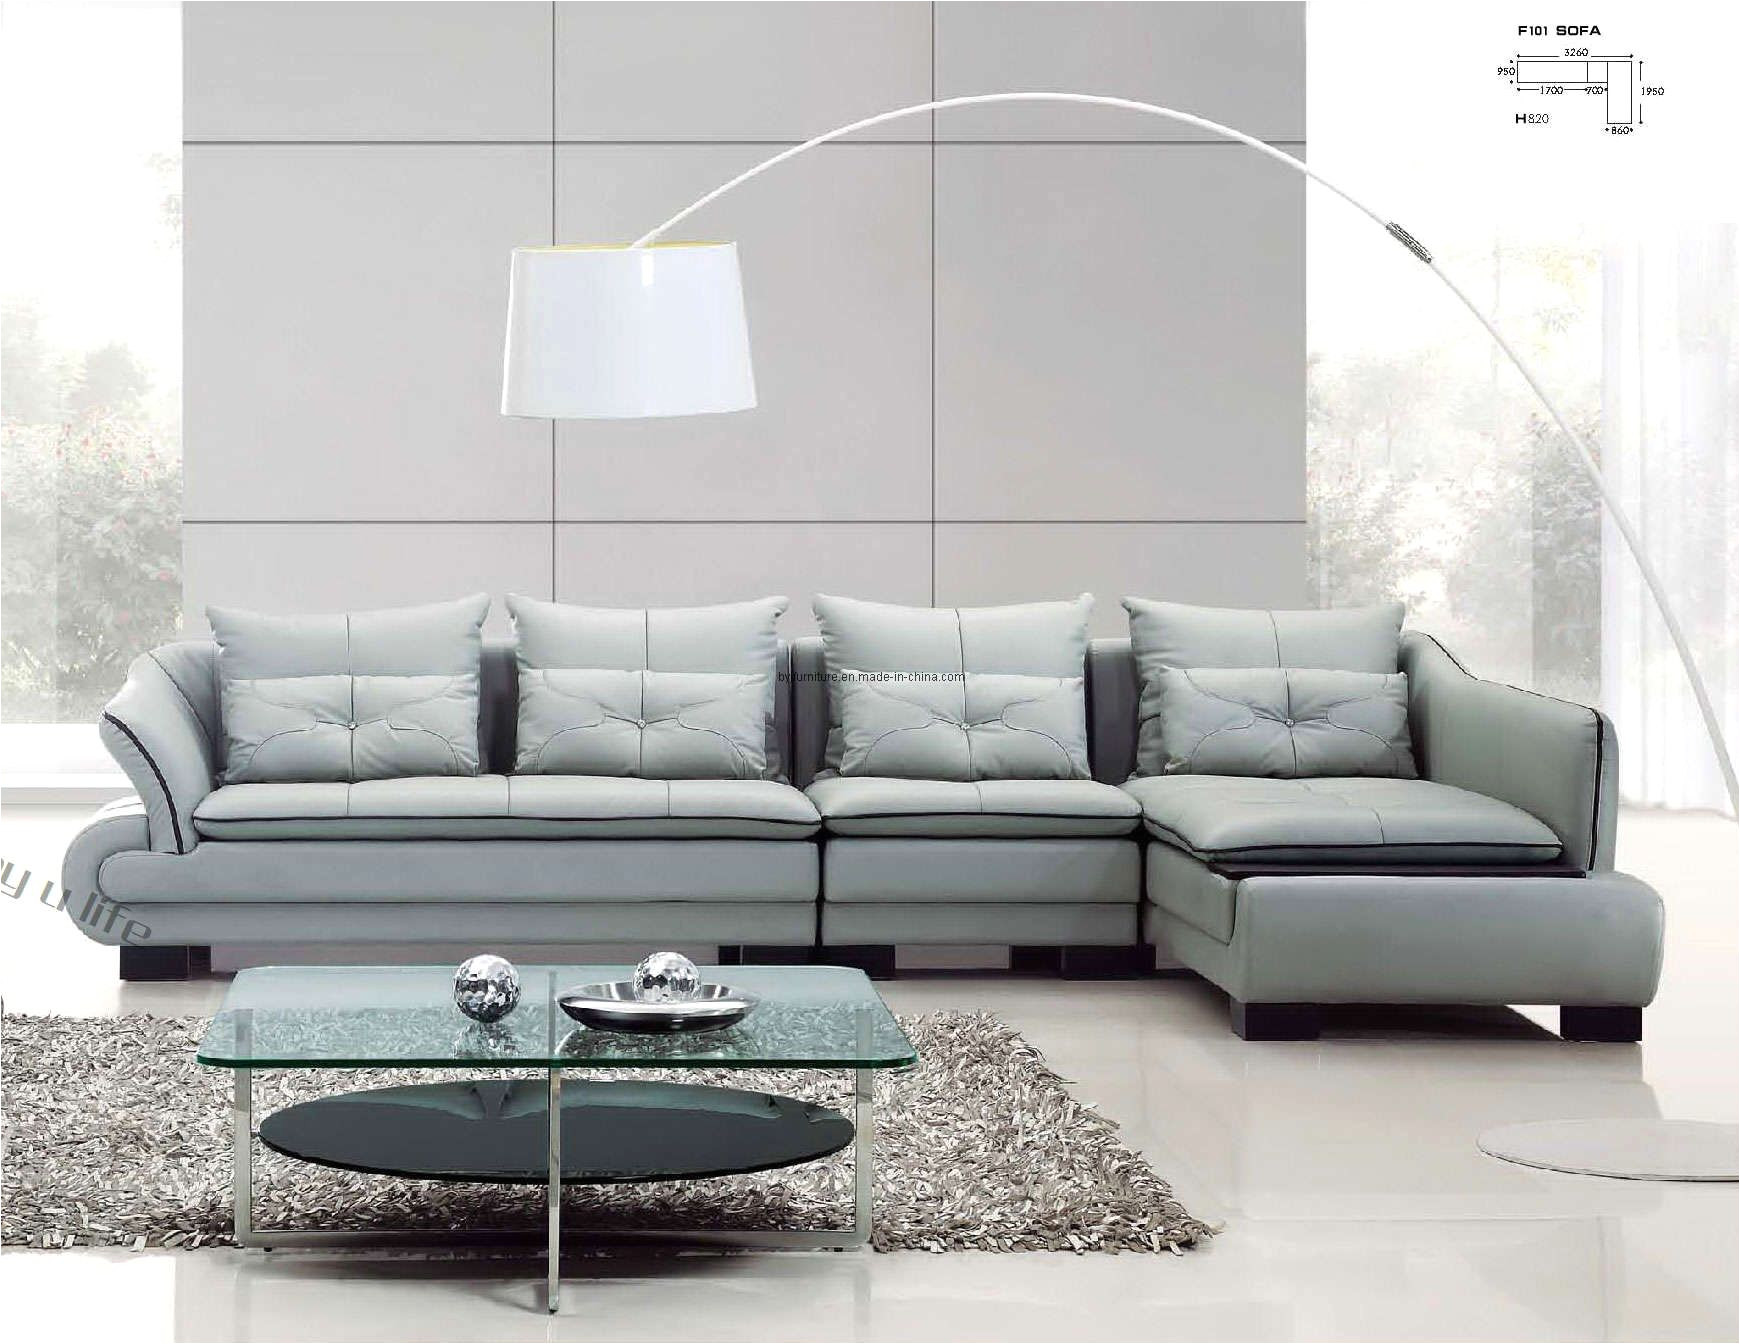 luxury sofa designs for living room image sofa designs for living room luxury 25 latest sofa set designs for living room furniture ideas hgnv